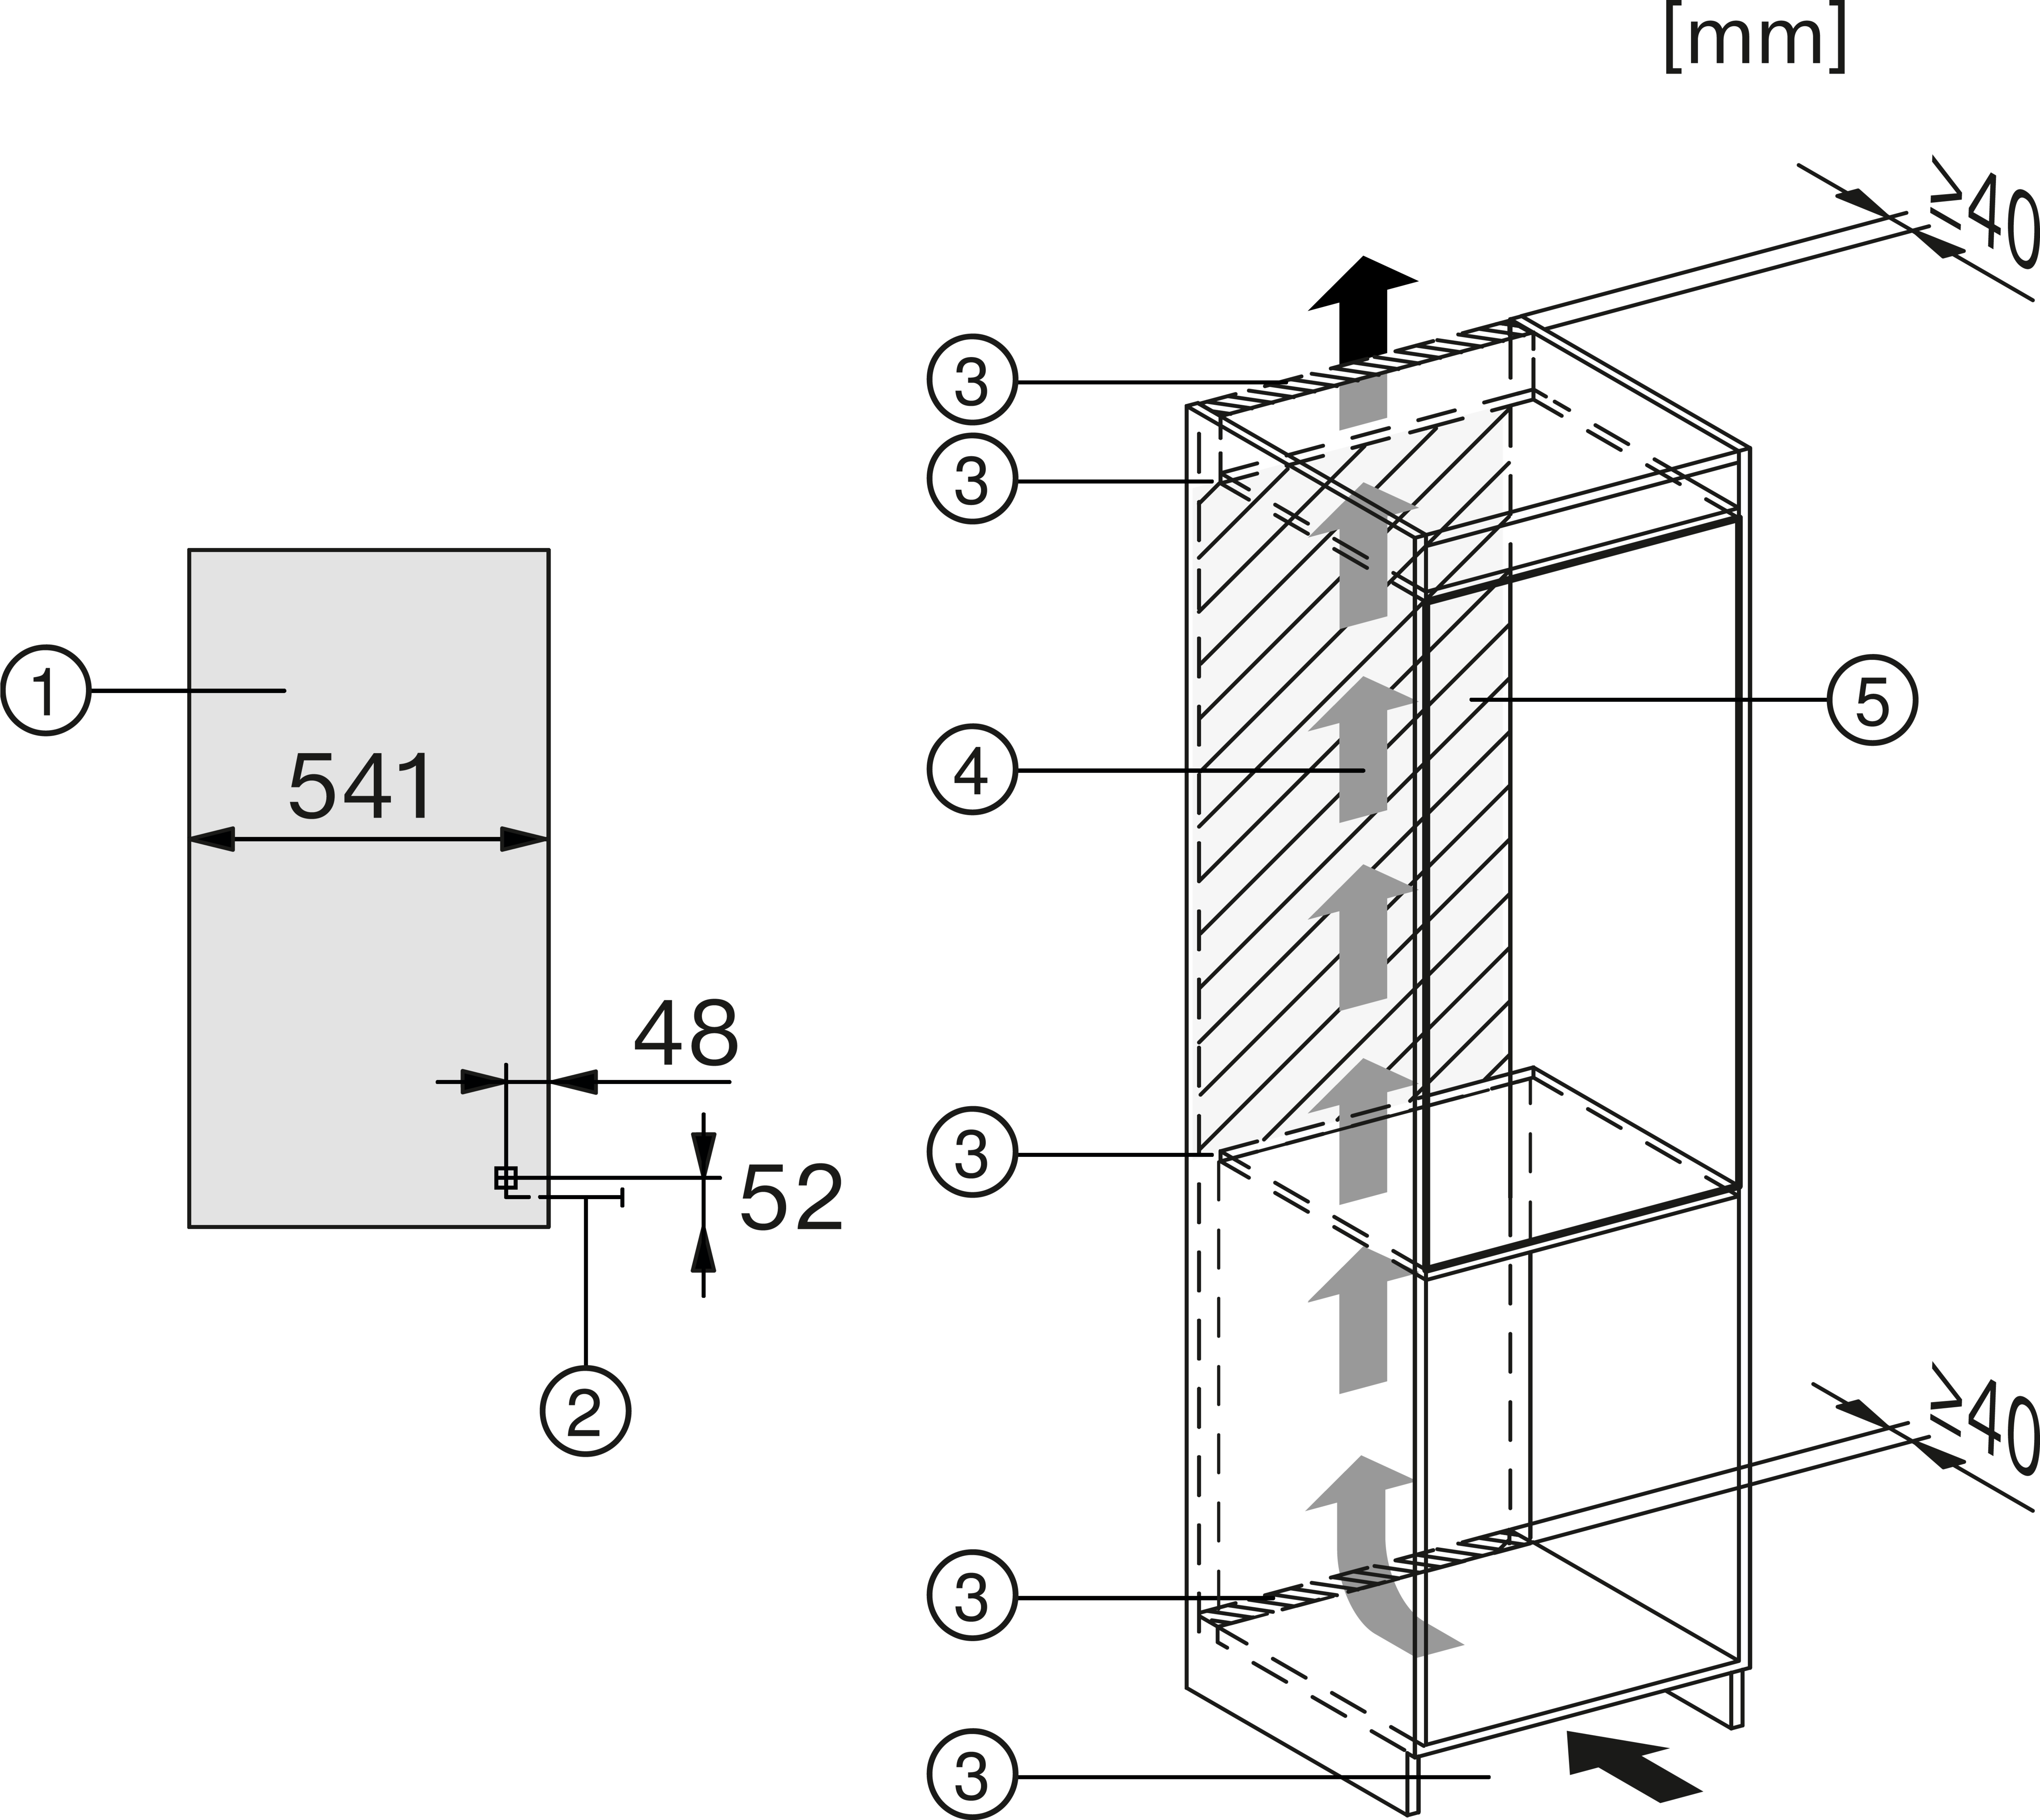 Maattekening MIELE koelkast inbouw K7216E